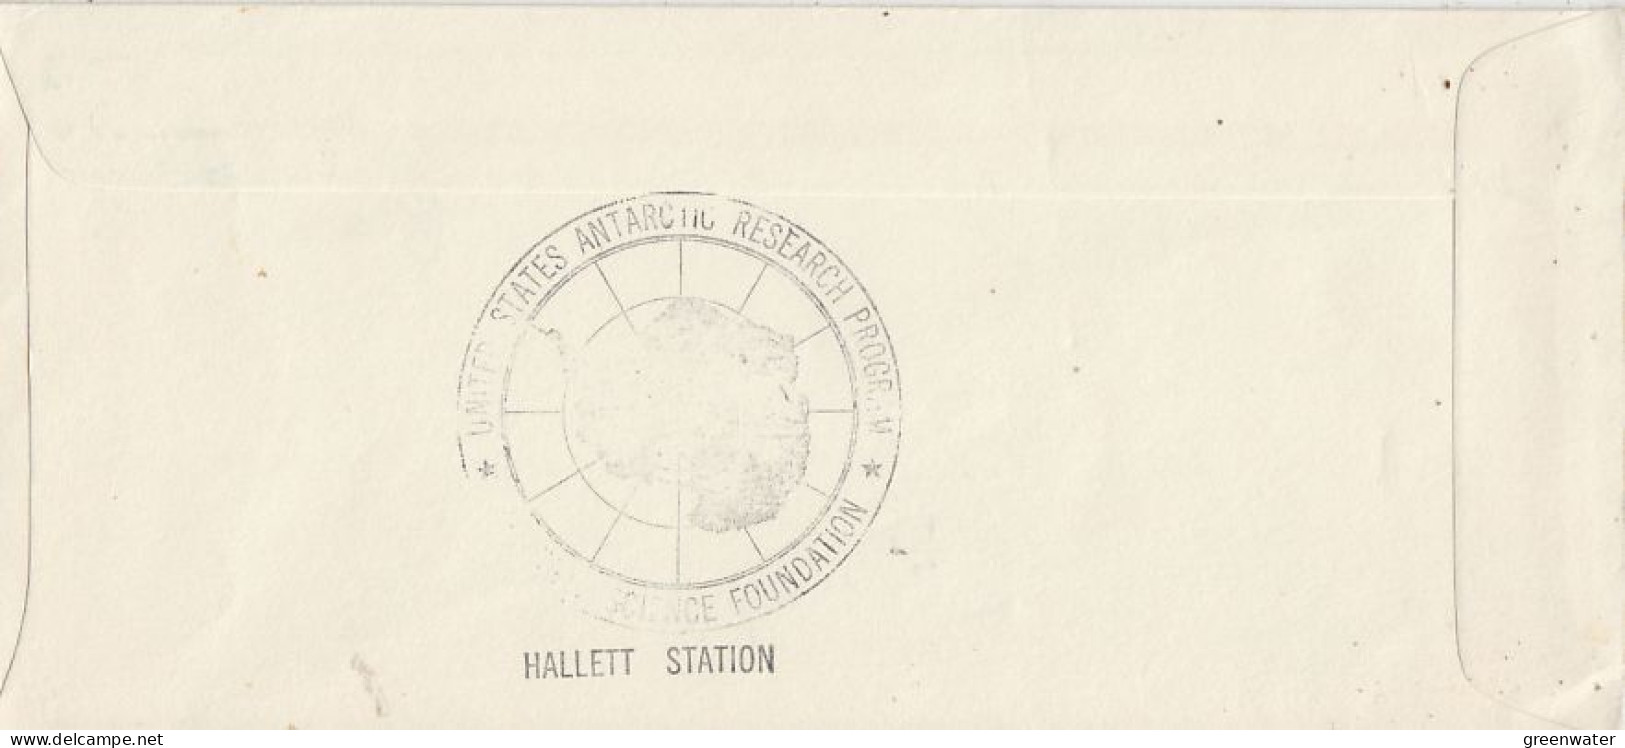 Ross Dependency Adare Station IGY NZ Antarctic Research Exp. Cape Hallett Ca Scott Base 23 DEC 1963 (RO187) - Año Geofísico Internacional